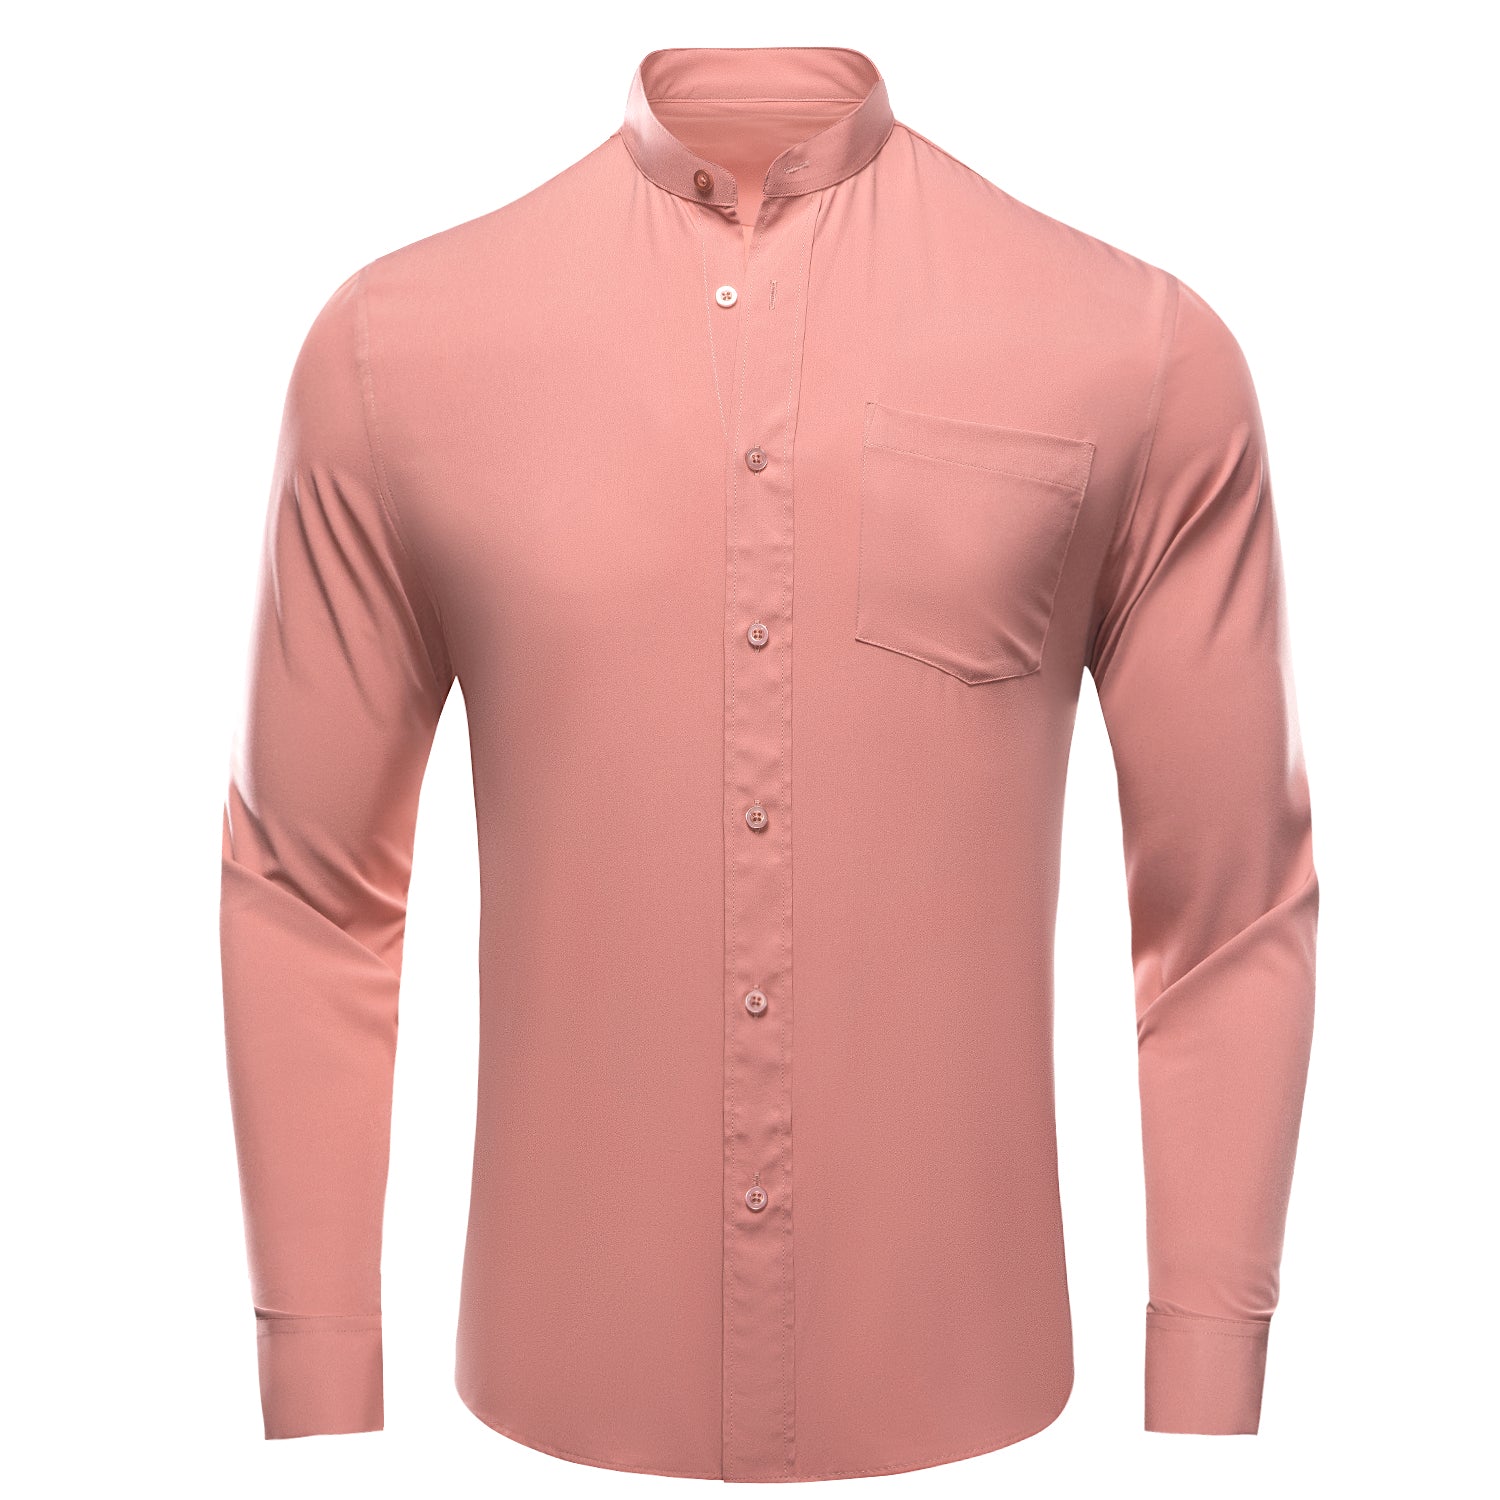 Salmon color Solid Men's Long Sleeve Dress Shirt